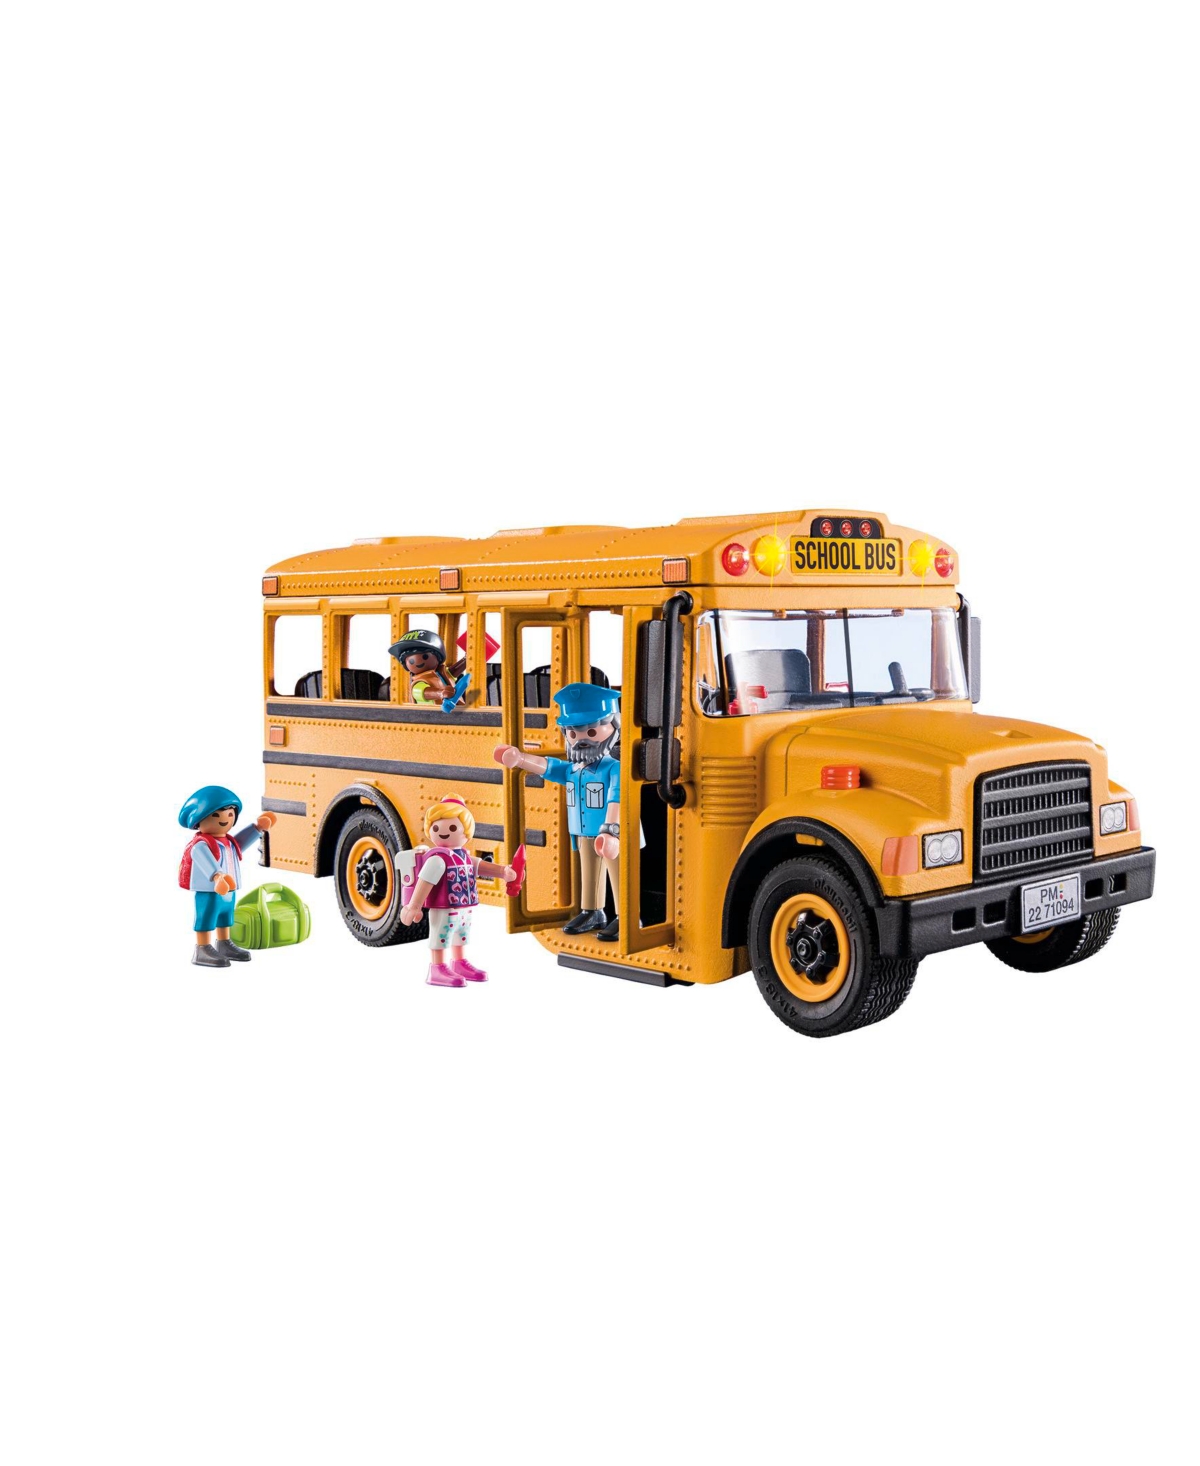 Playmobil Kids' School Bus In Multi